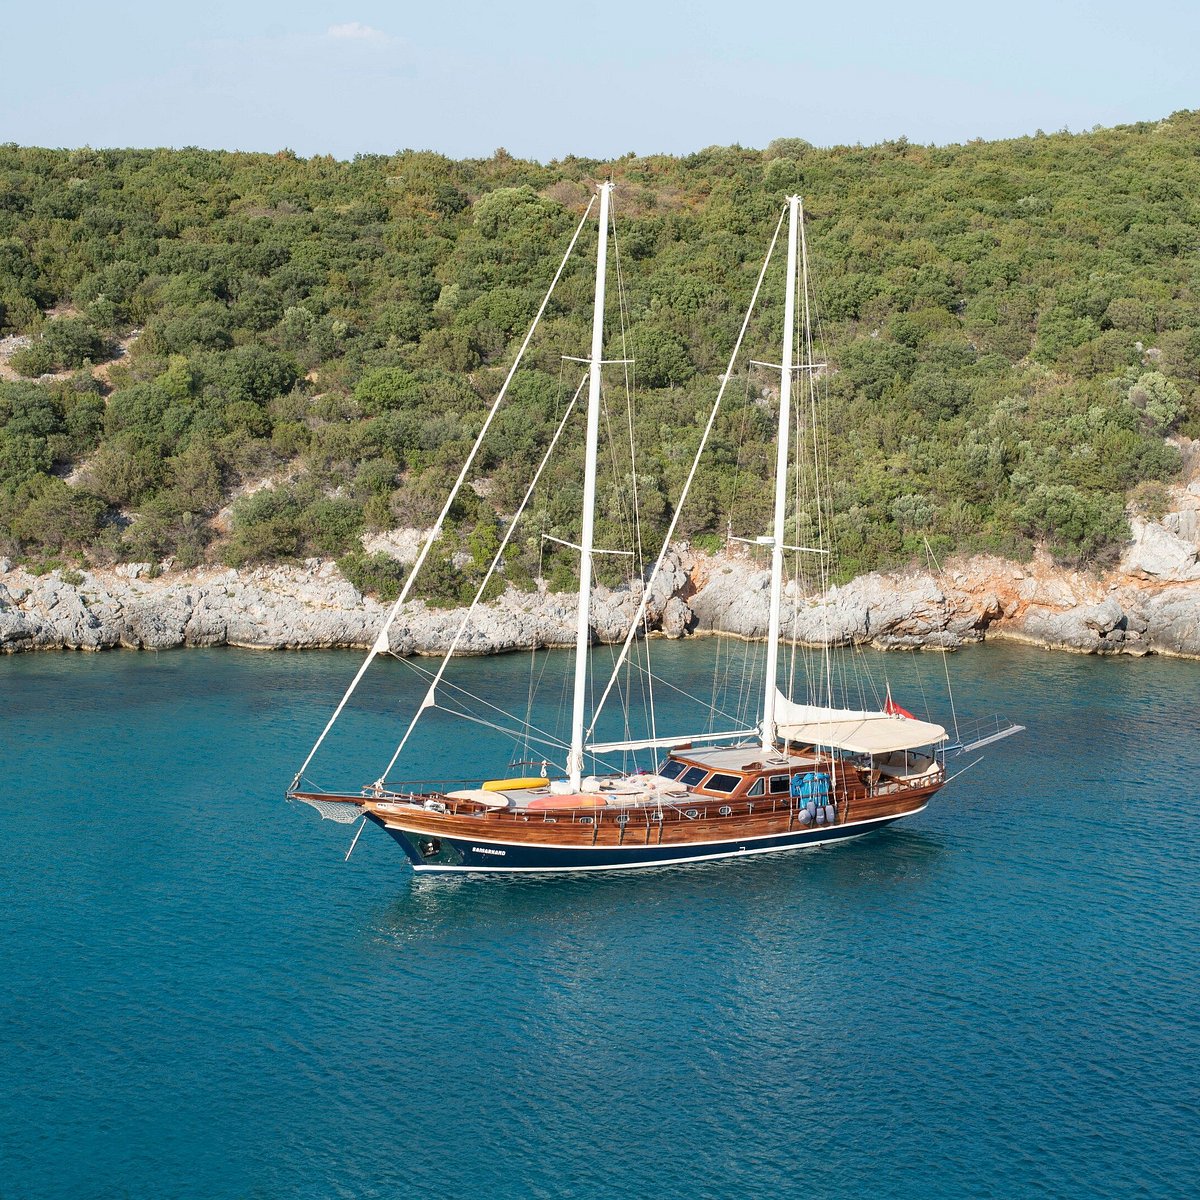 zephyria yachting bodrum turkey